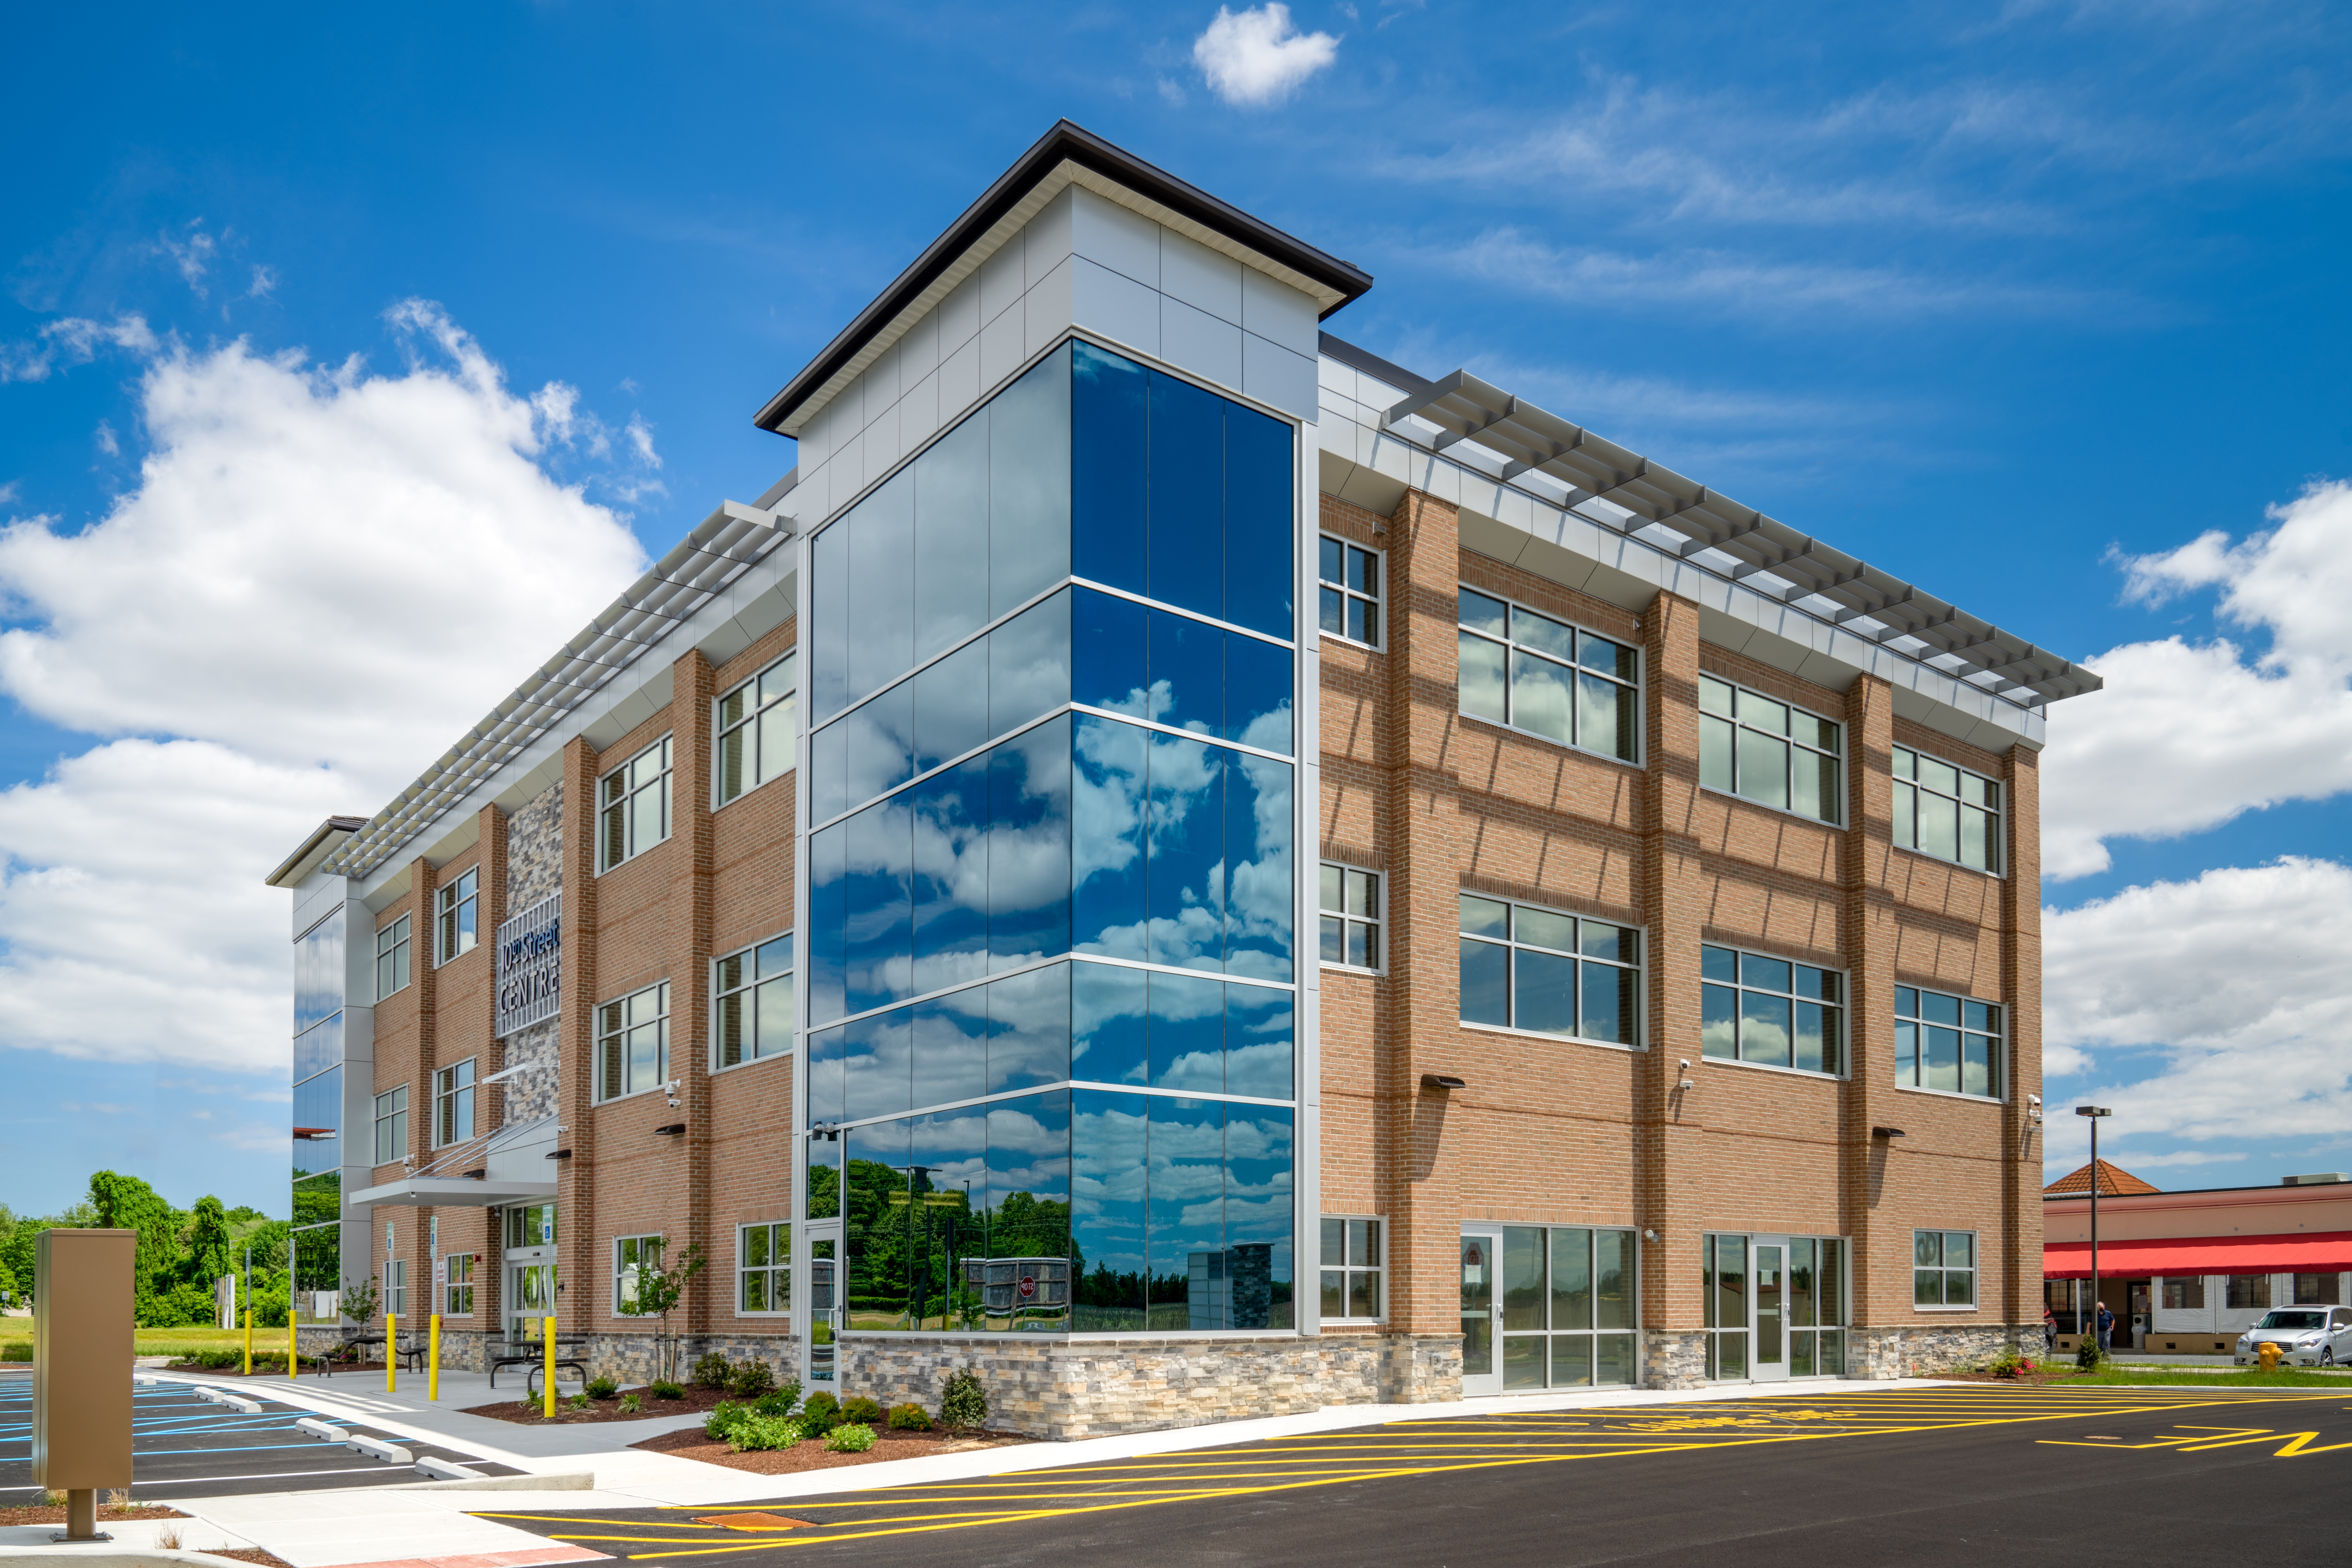 Presenting ‘10th Street Centre’ – Milford, Delaware’s New Premier Healthcare Destination